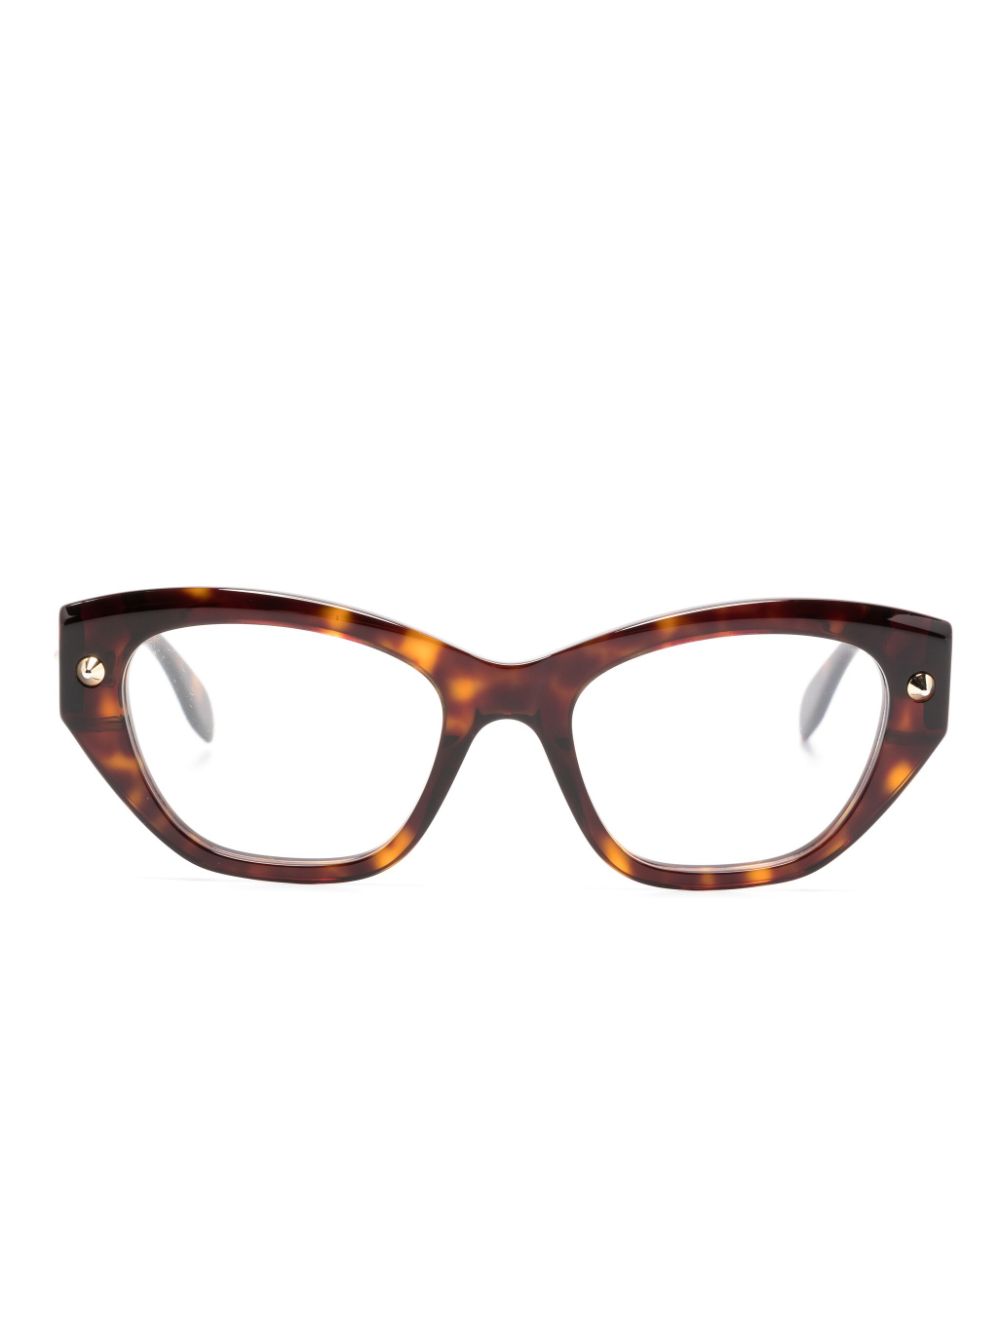 alexander mcqueen eyewear lunettes de vue à monture papillon - marron